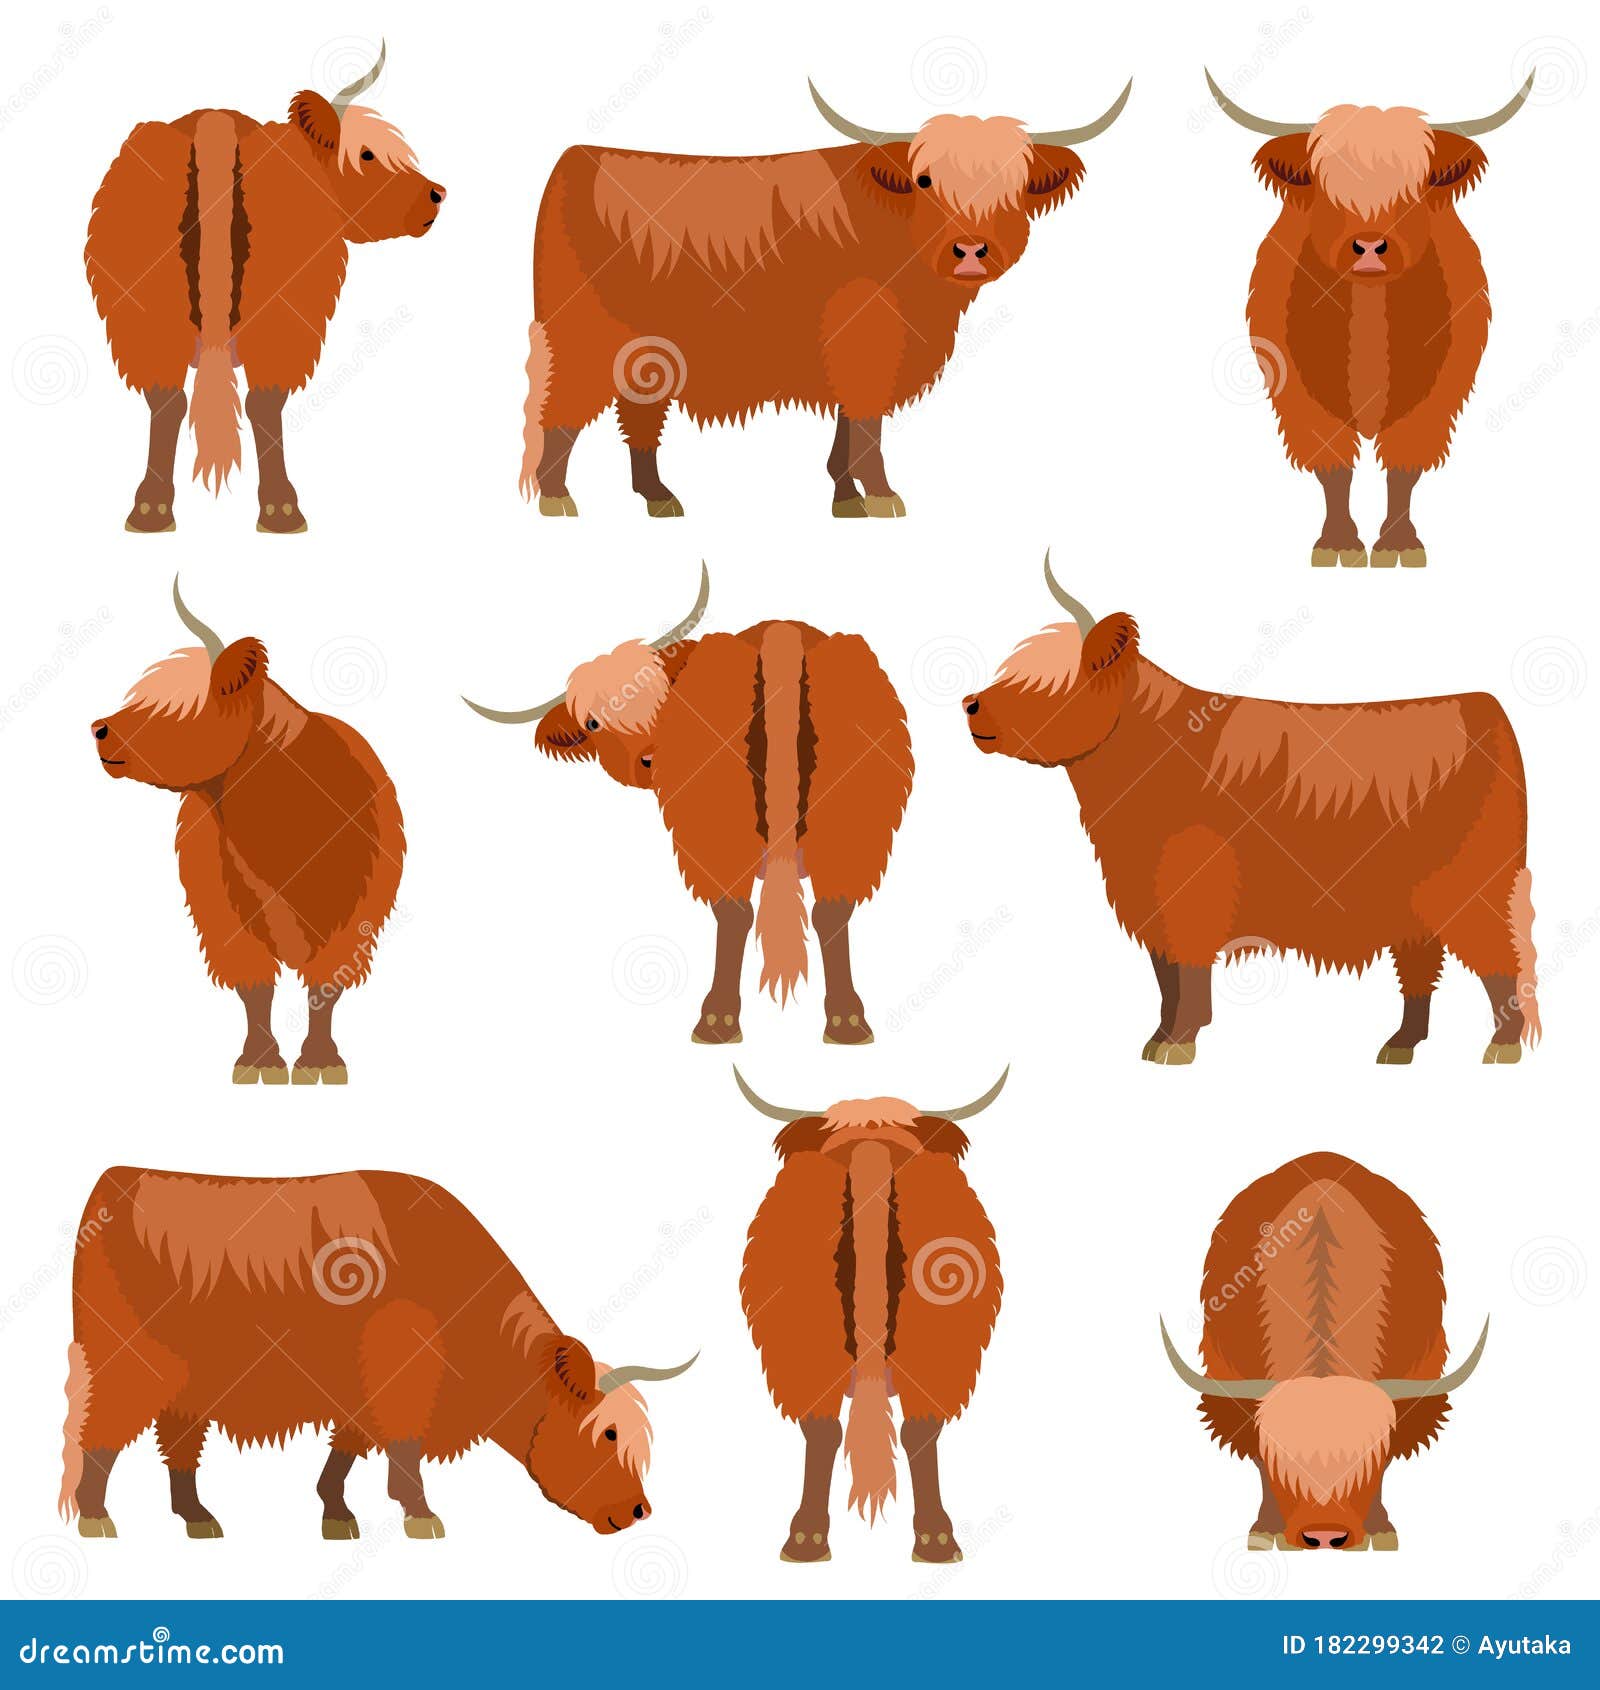 highland cattle various pose set